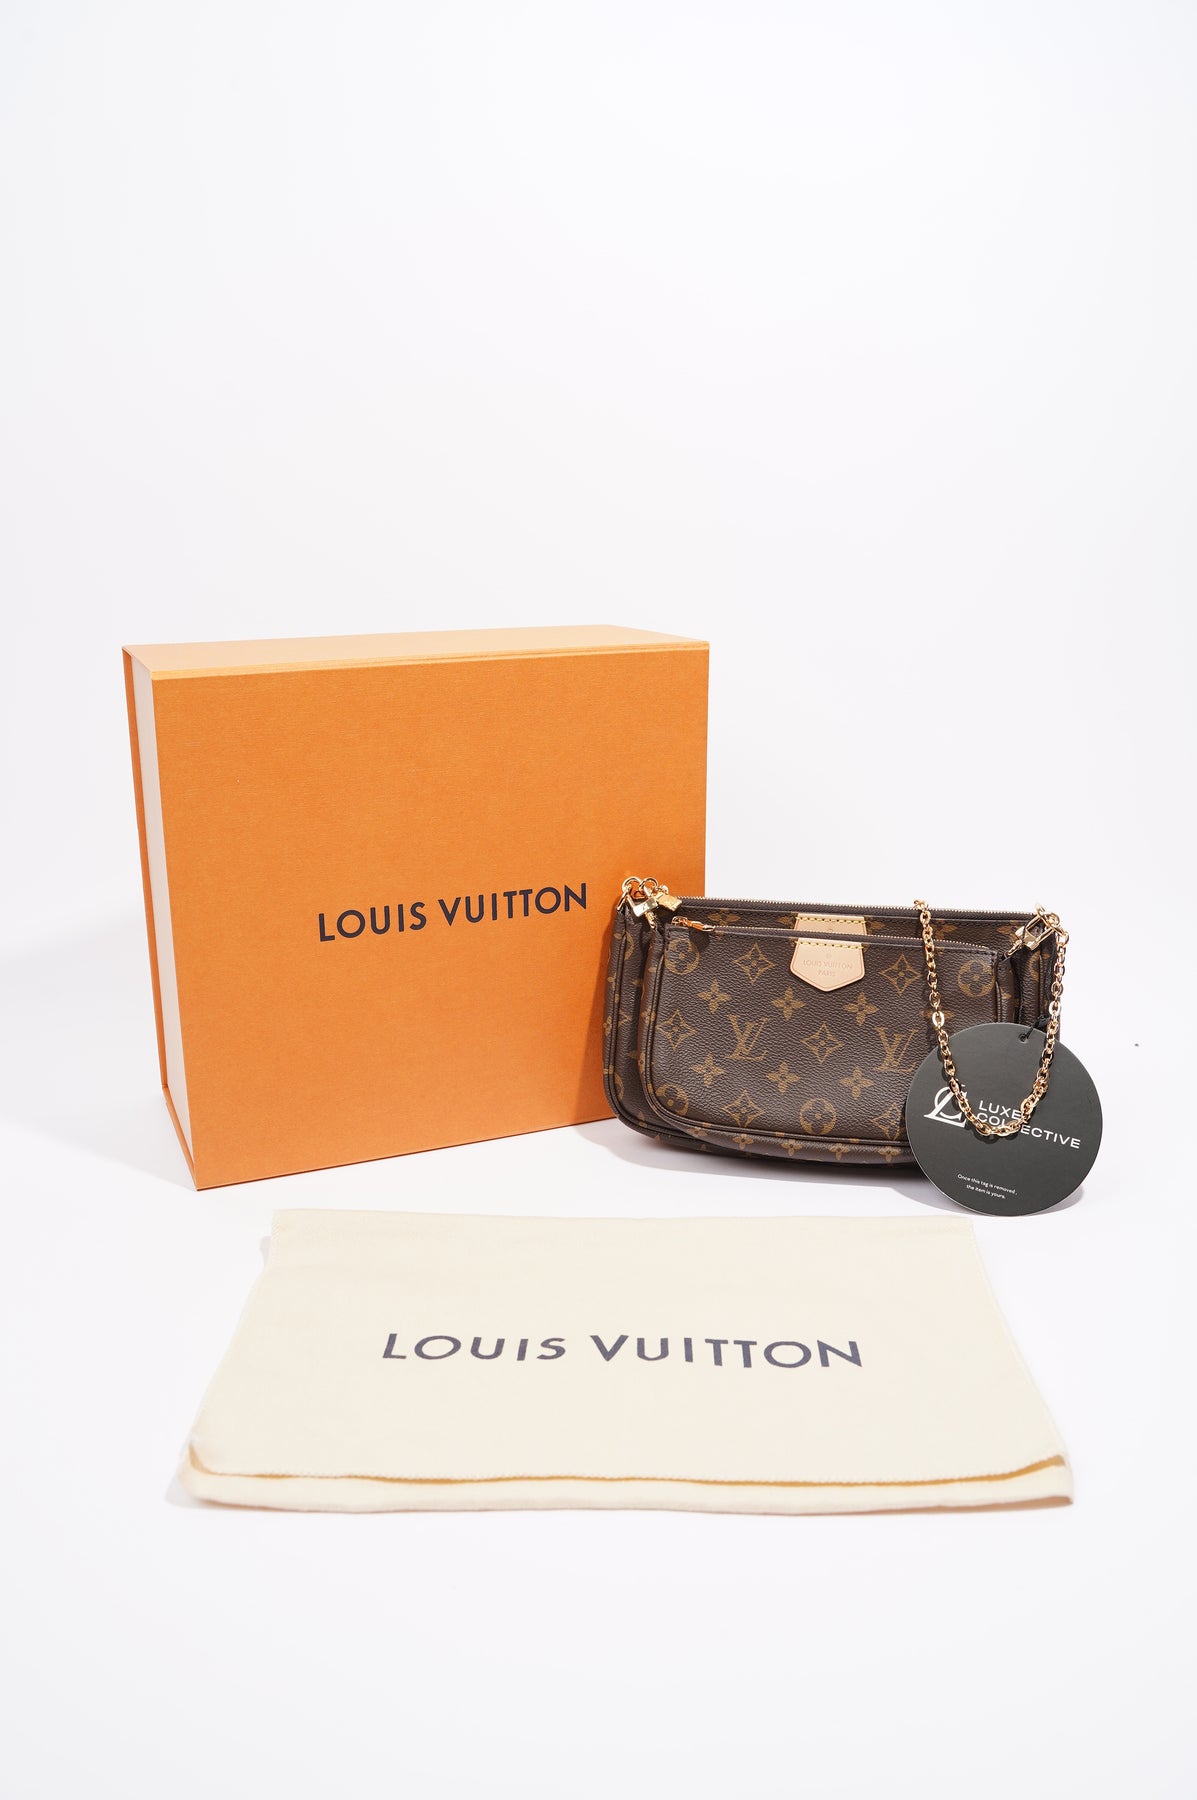 Caja Louis Vuitton